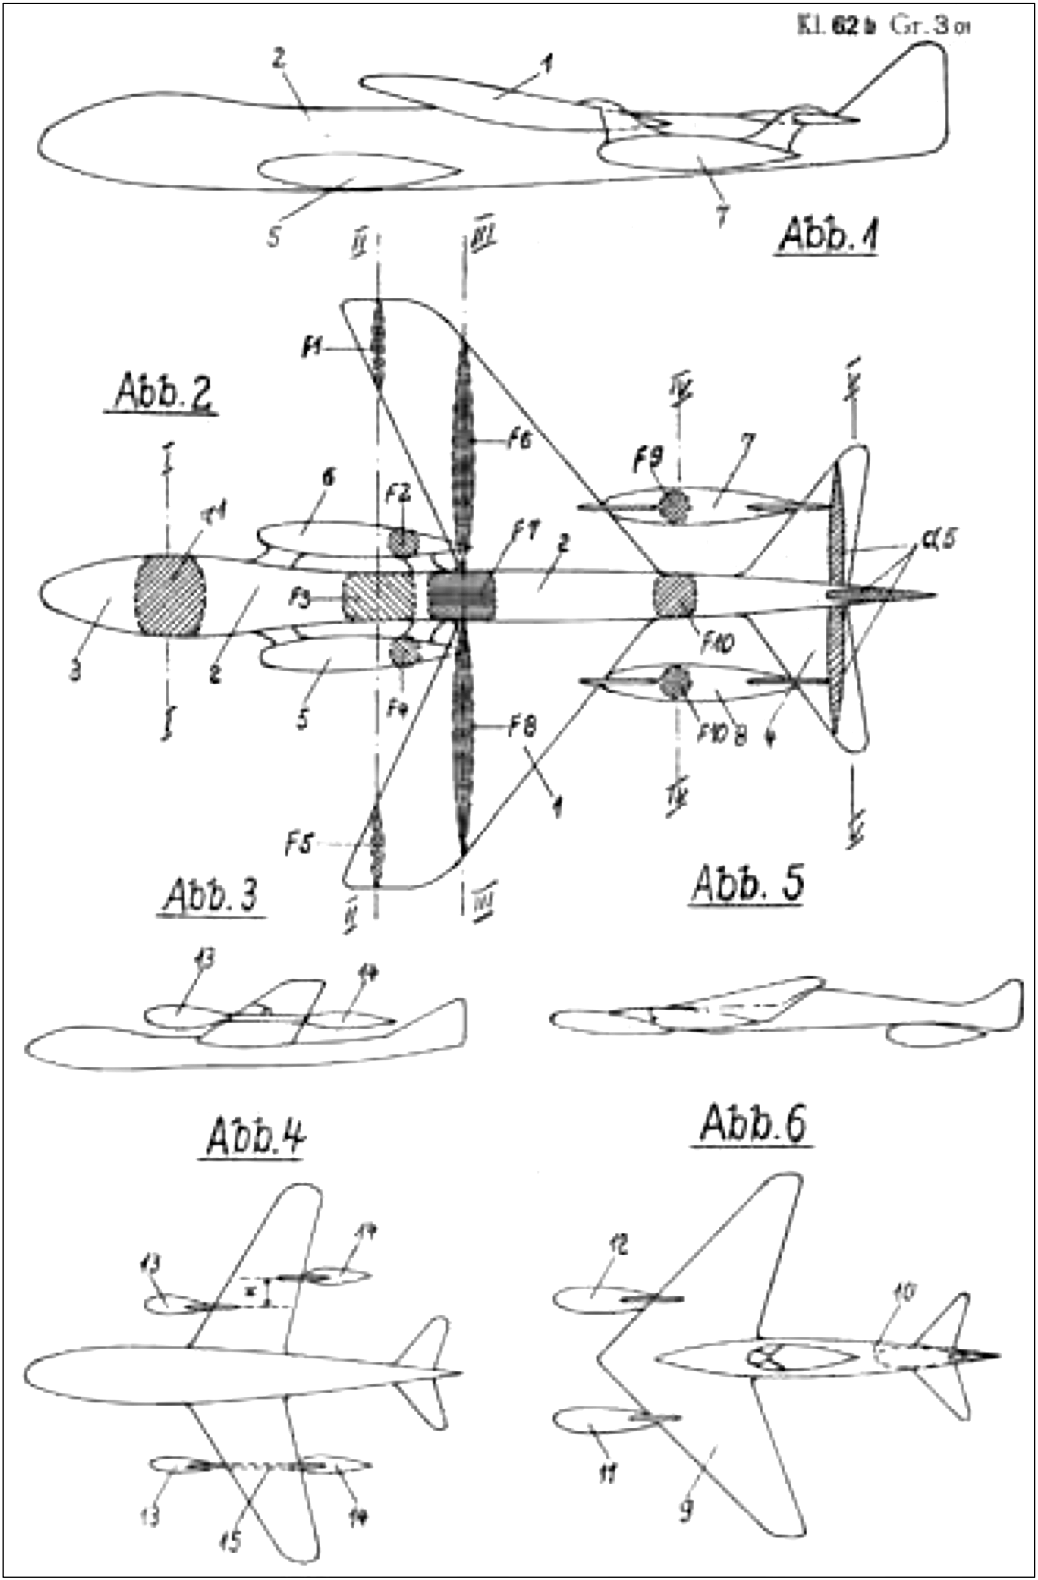 Иллюстрация из патента Юнкерса 1943 года